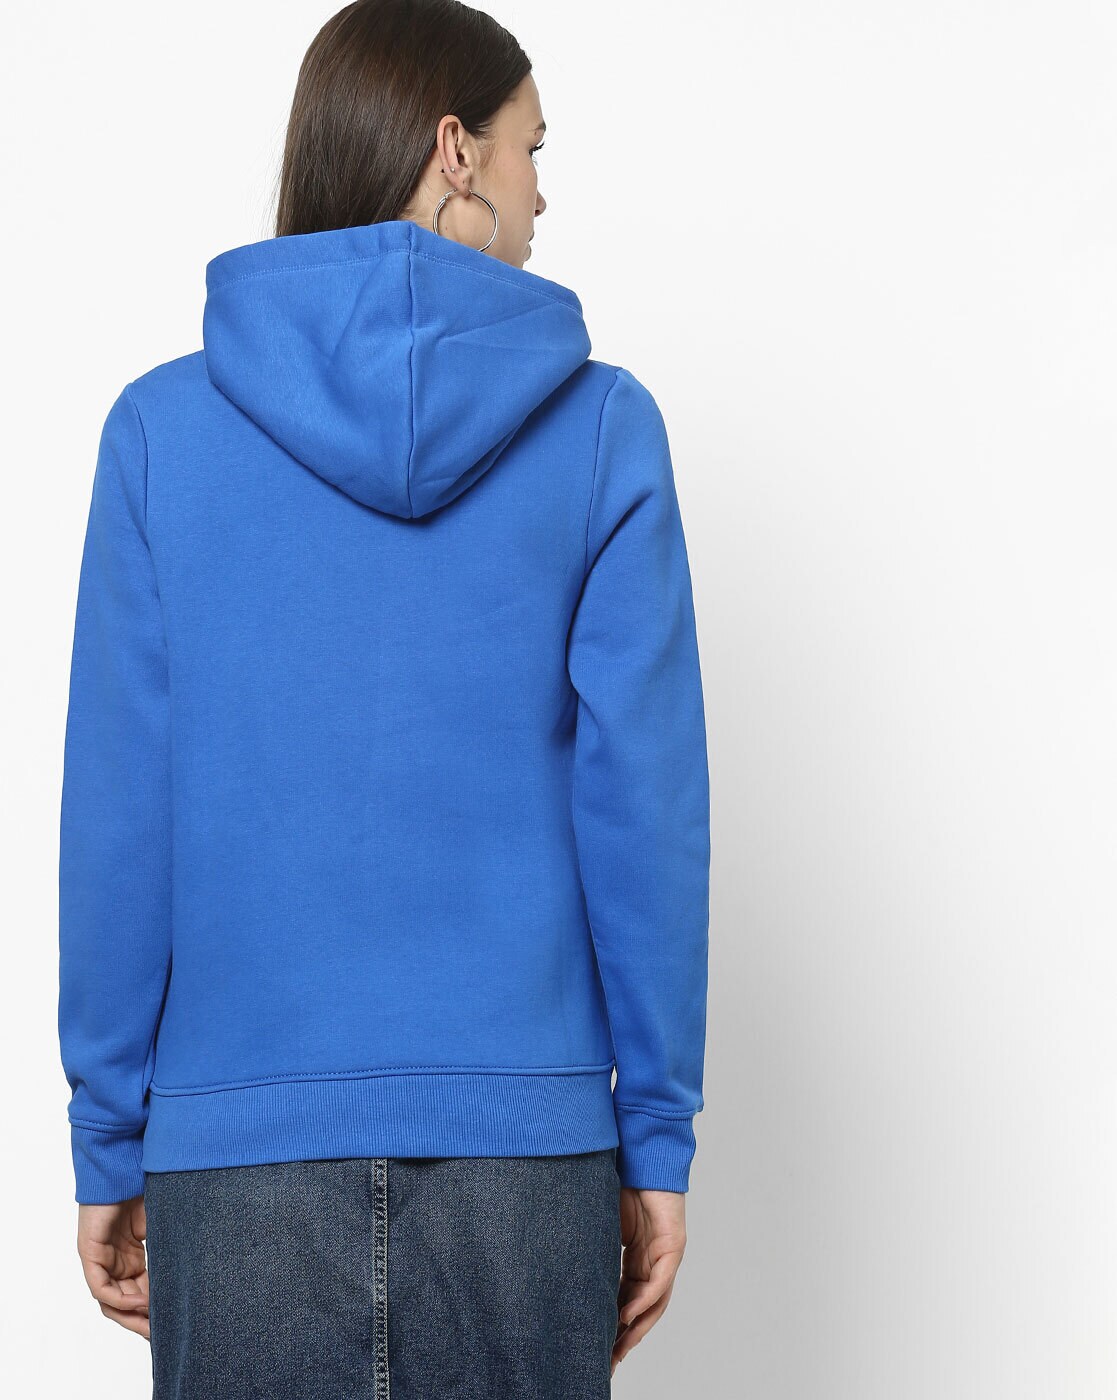 Buy Blue Sweatshirt & Hoodies for Women by TOMMY HILFIGER Online